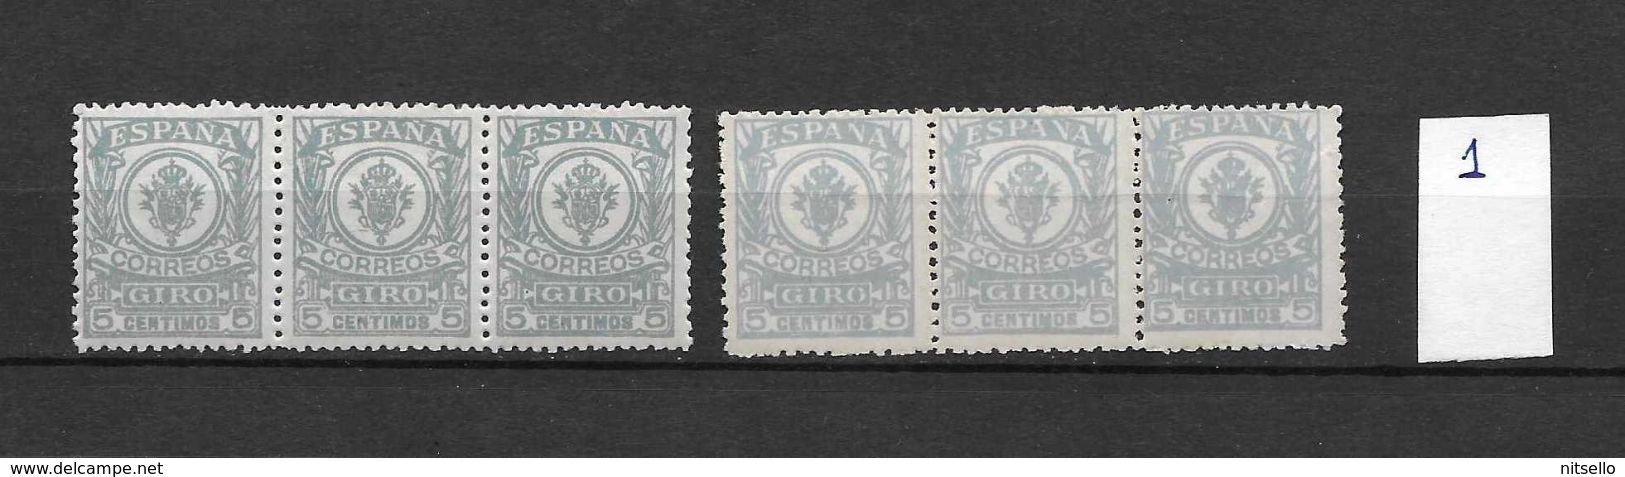 LOTE 1891 D ///  (C025) ESPAÑA GIRO  EDIFIL Nº 1  VARIEDAD DE COLOR **MNH - Revenue Stamps